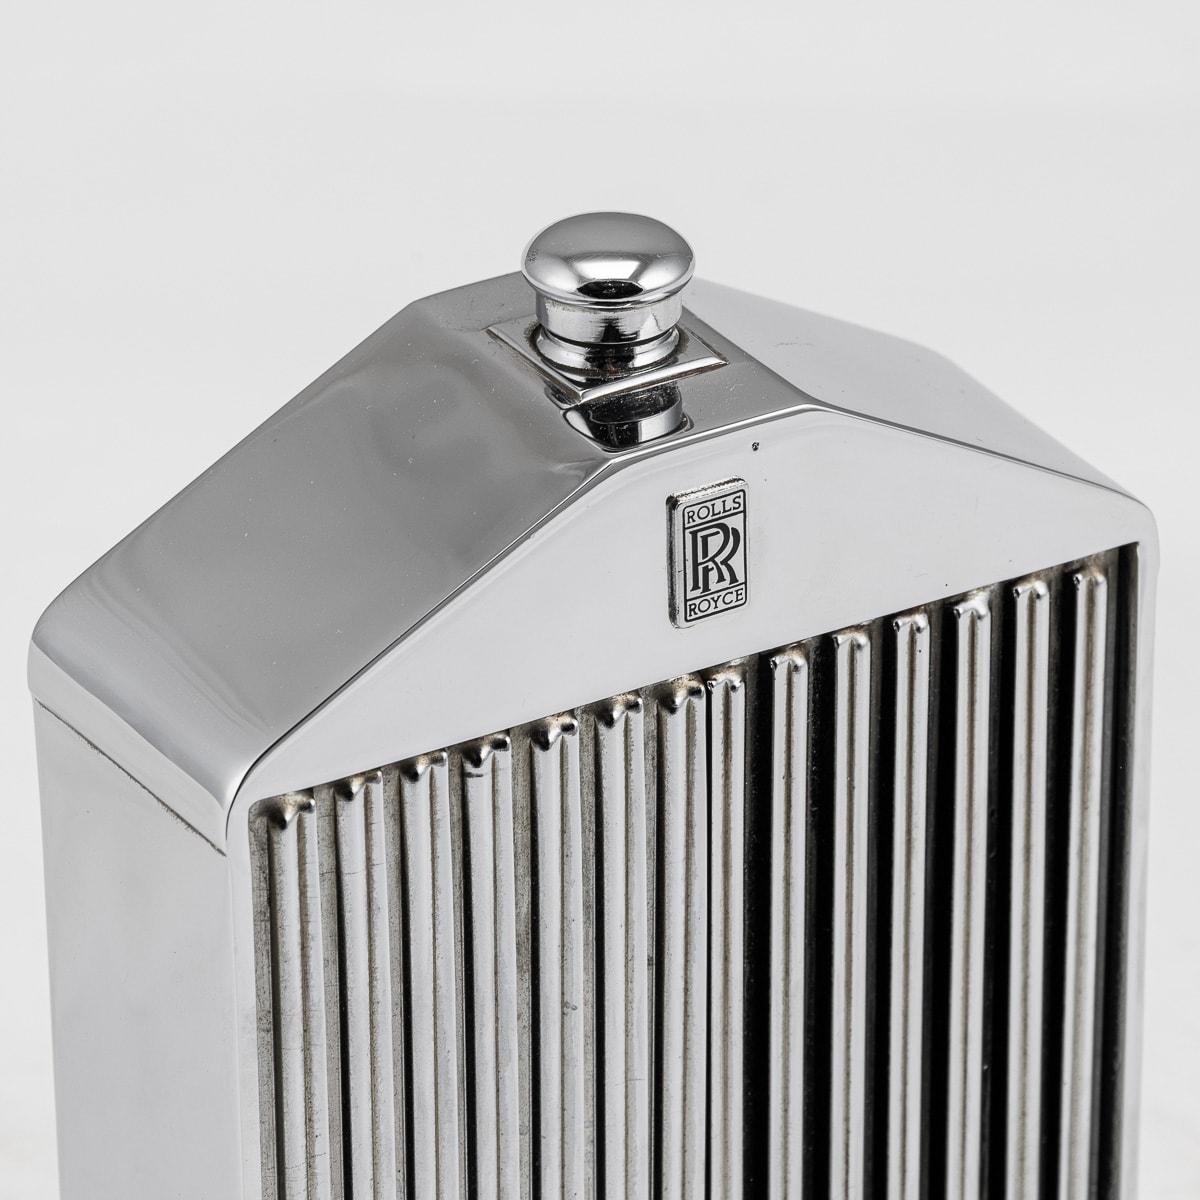 Metal 20th Century Stylish Ruddspeed Rolls Royce Radiator Flask / Decanter c.1960 For Sale